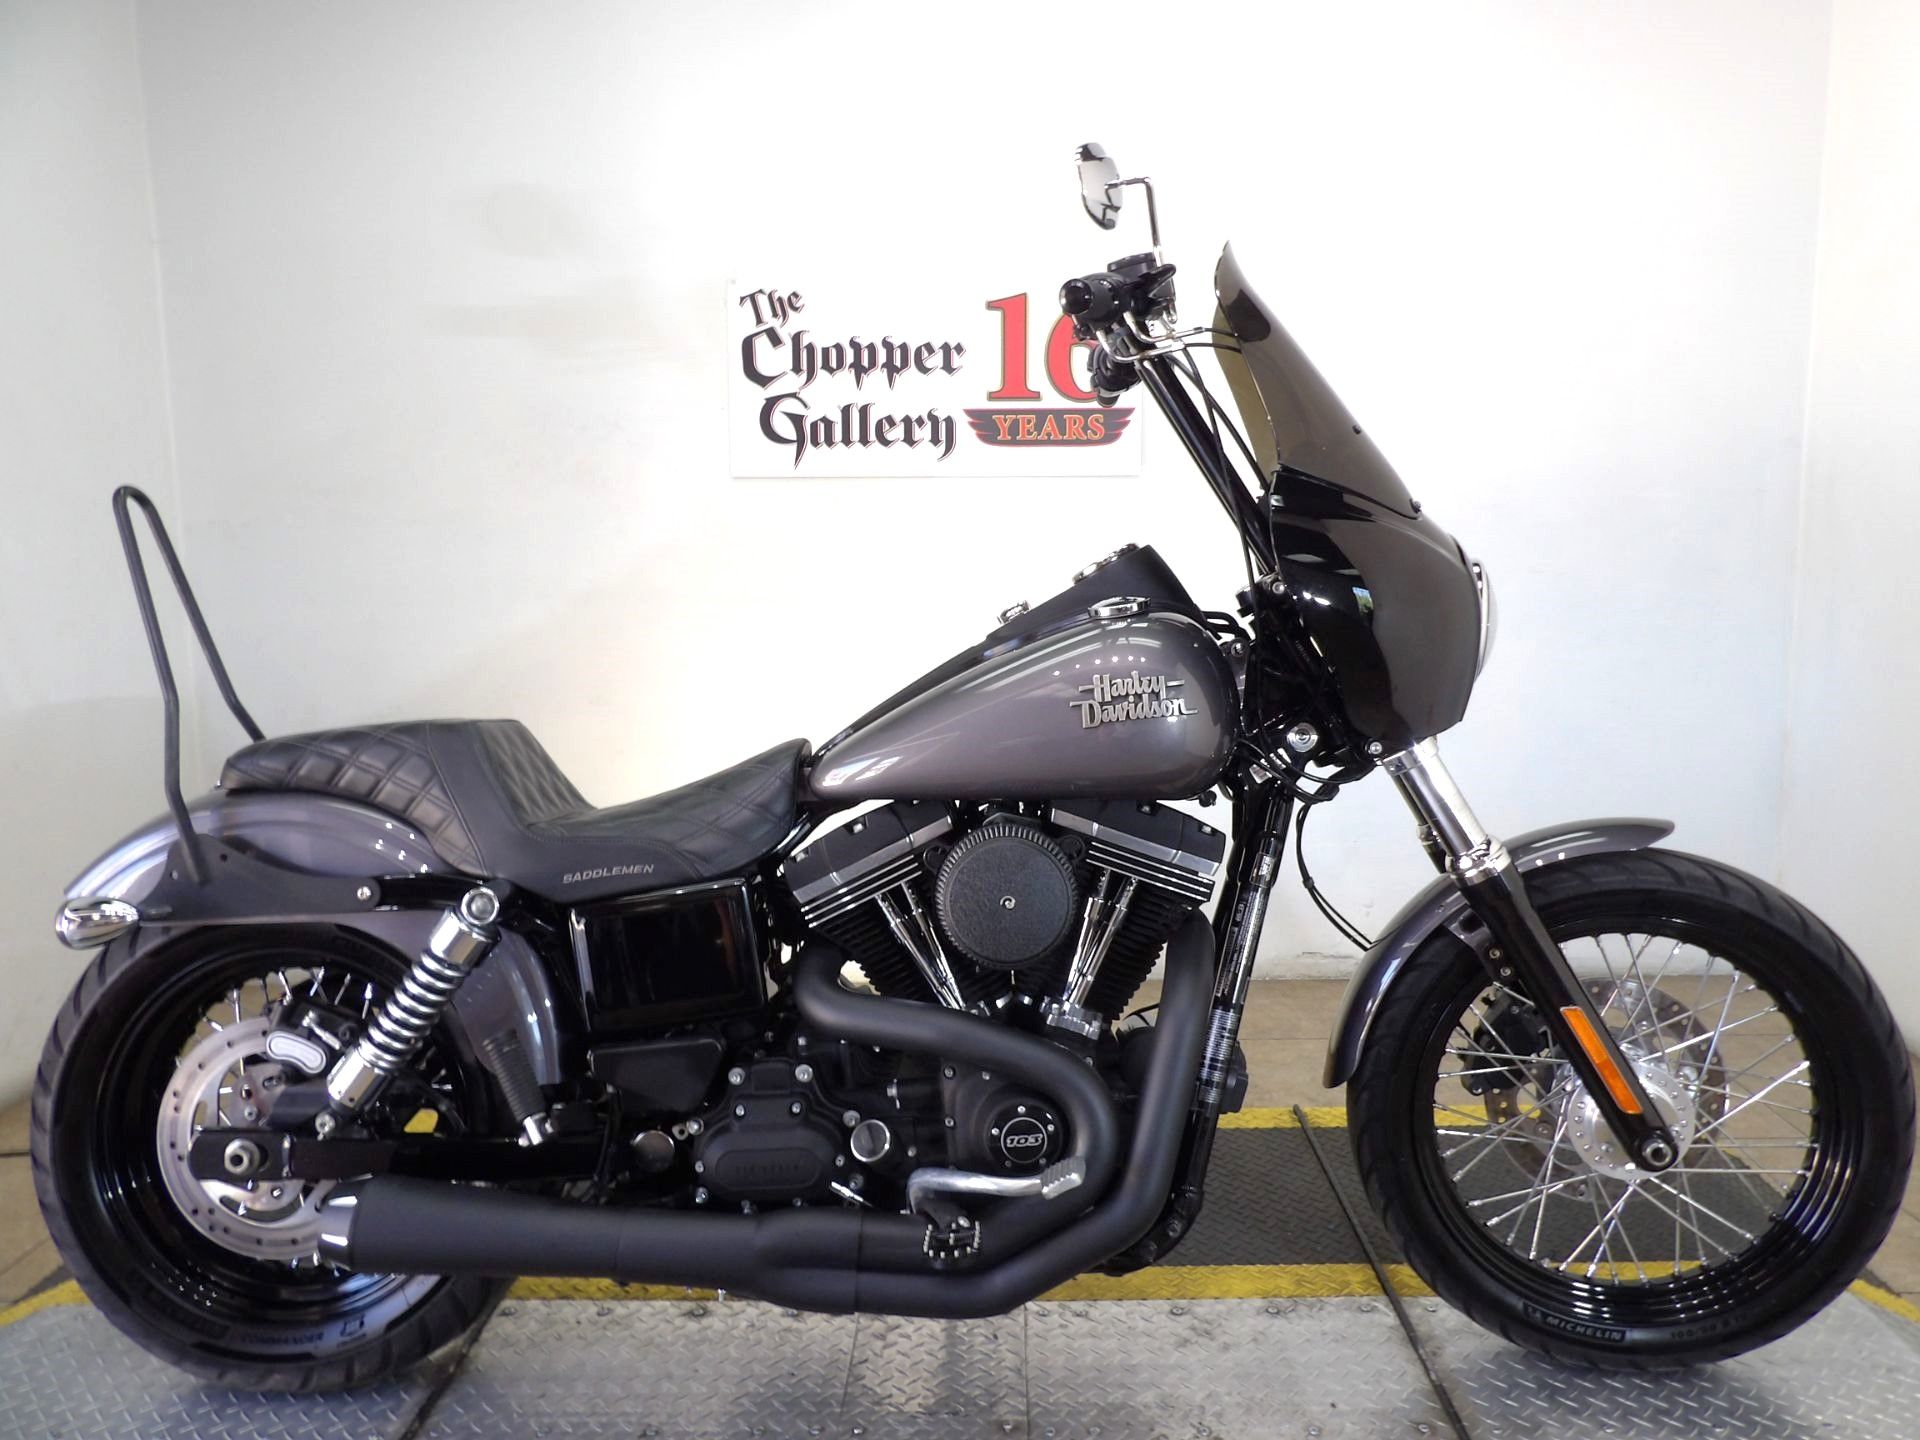 2016 Harley-Davidson Street Bob® in Temecula, California - Photo 1